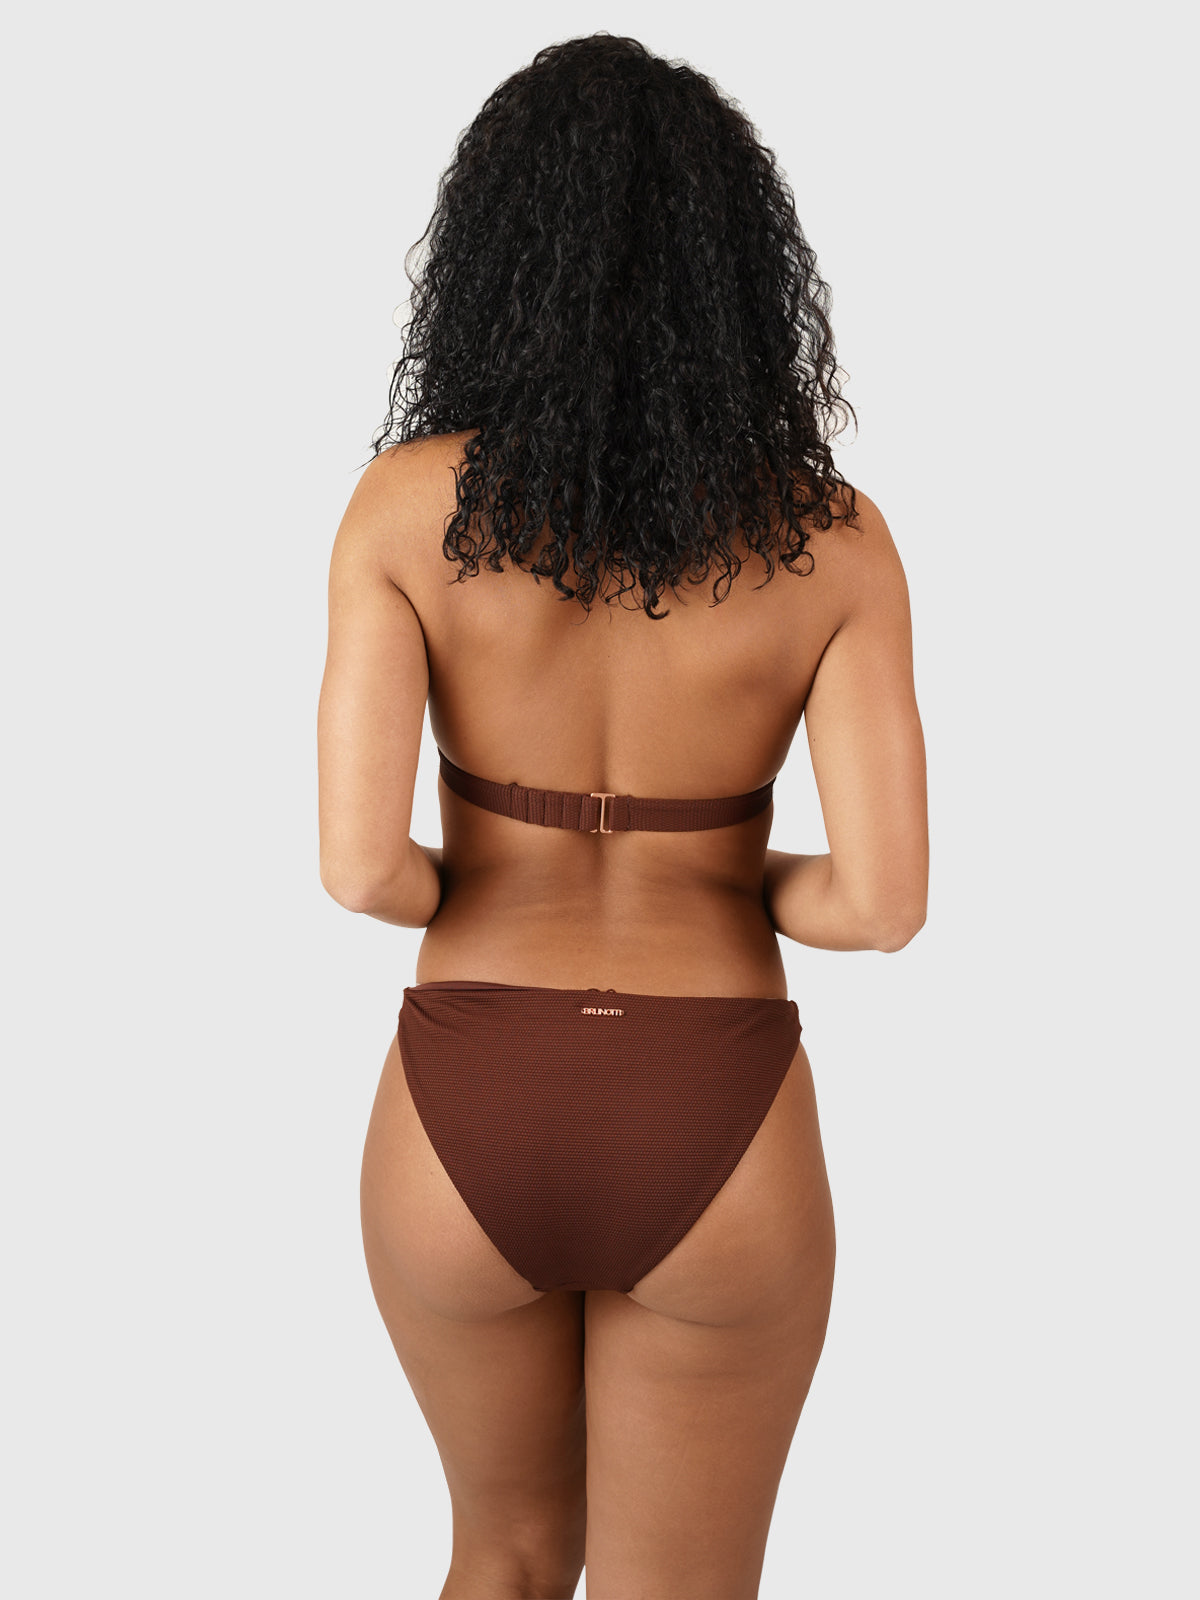 Kohali-STR Damen Bralette Bikini Set | Braun